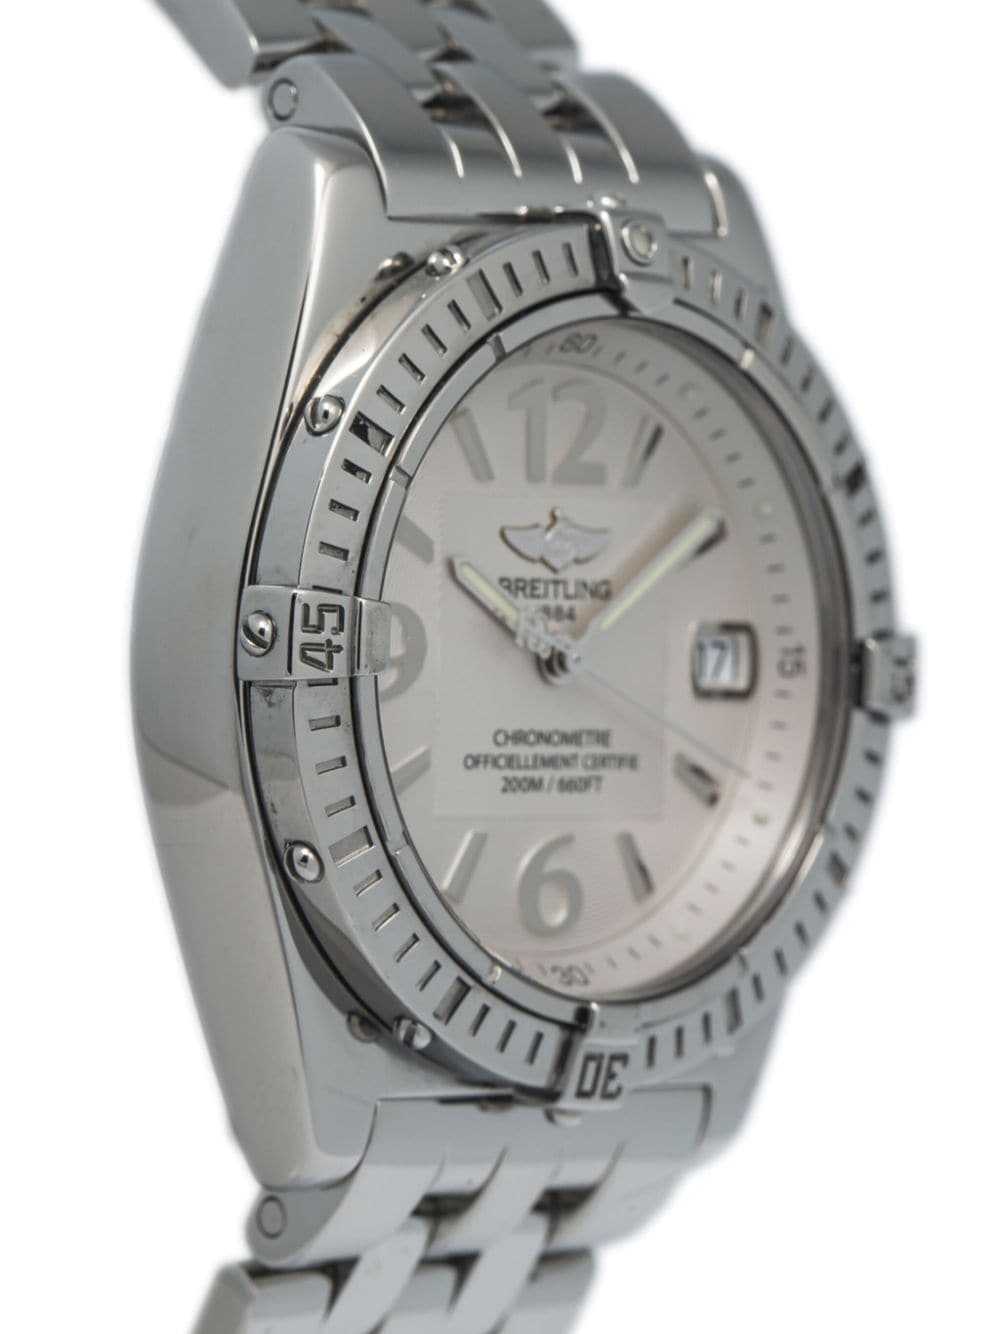 Breitling pre-owned Chronometre 34mm - White - image 3